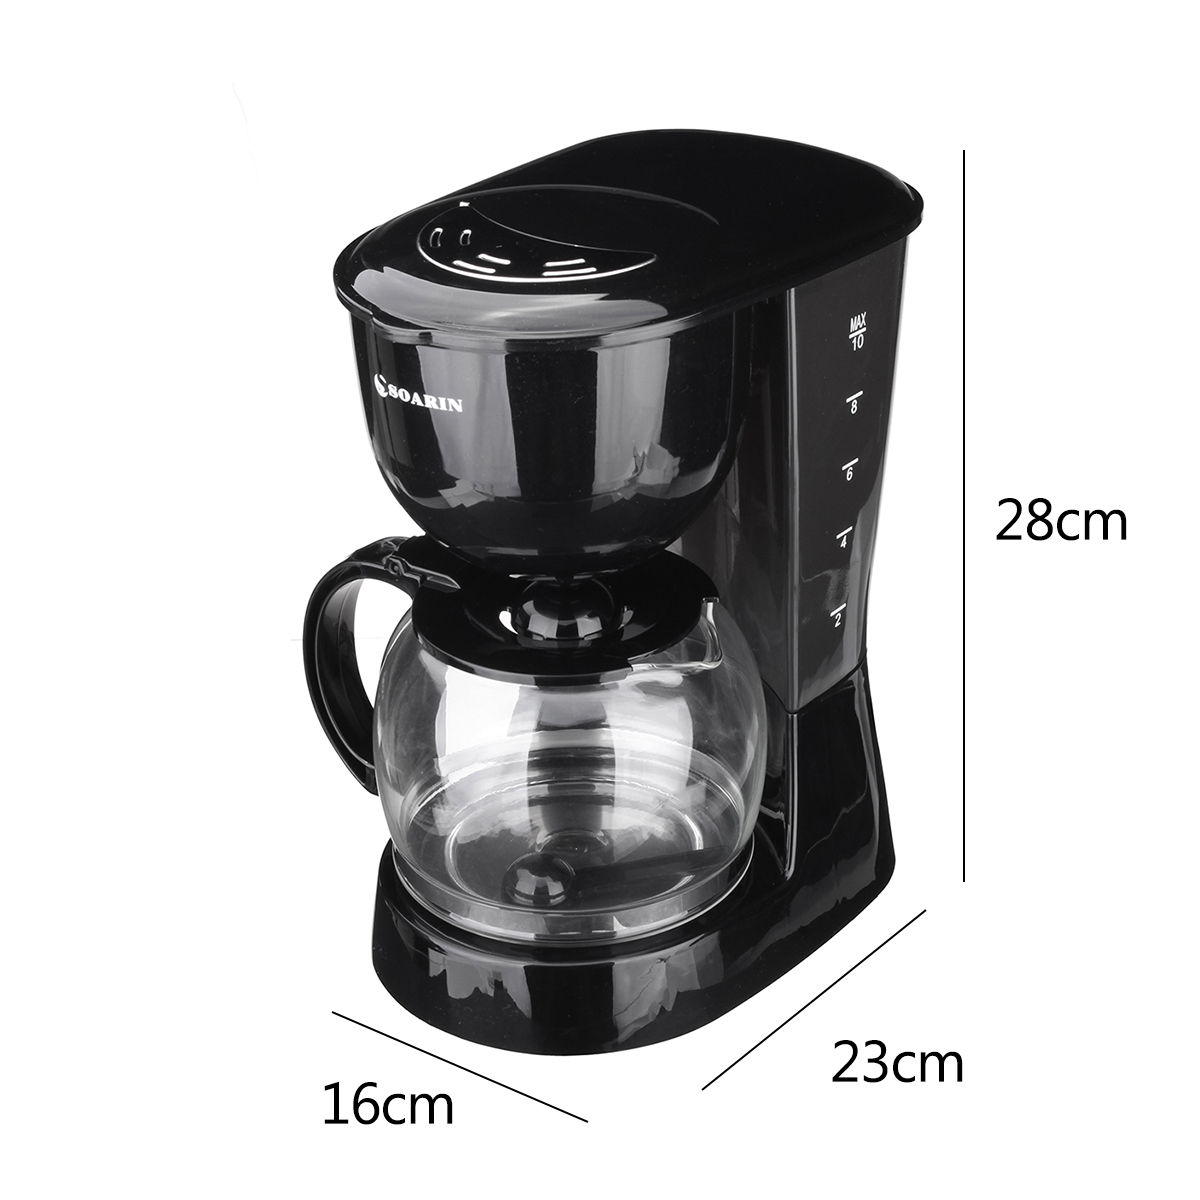 Soarin 1.25L 800W Electric Coffee Tea Maker Espresso Latte Machine Home Office Cafe Coffee Machine 40